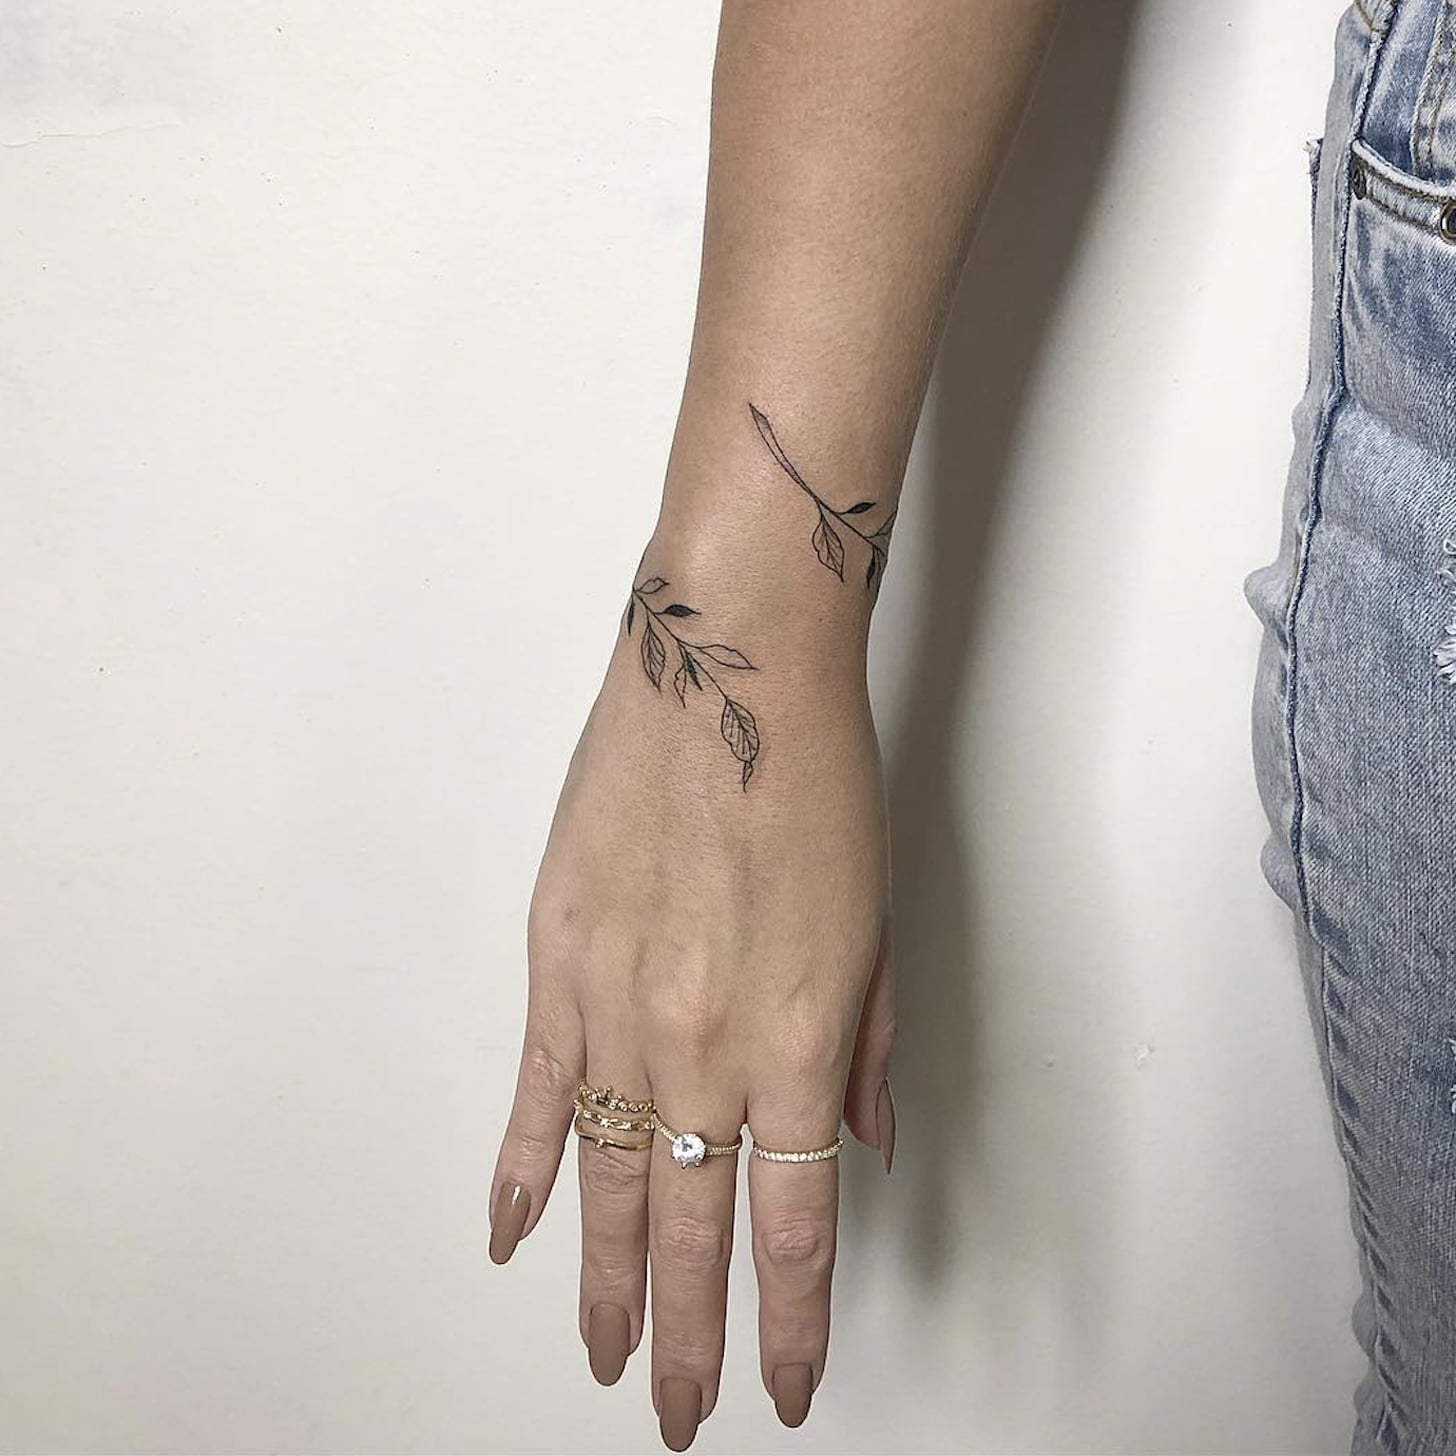 Hand bracelet tattoo